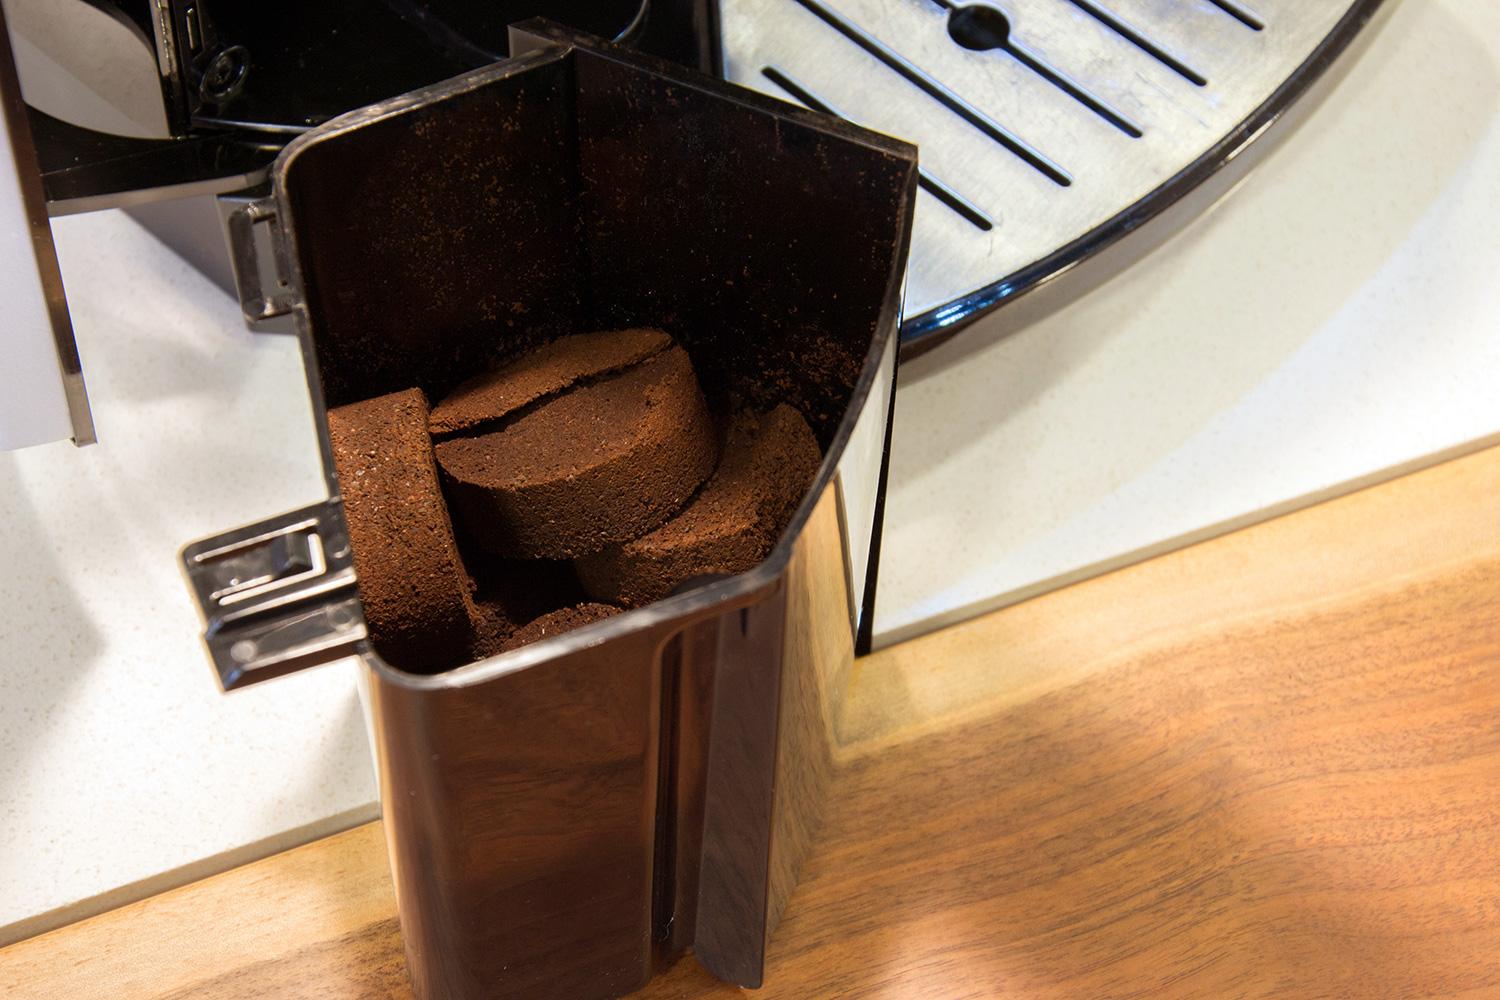 https://www.digitaltrends.com/wp-content/uploads/2015/06/Krups-EA9010-Coffee-Maker-grindbin.jpg?fit=1500%2C1000&p=1